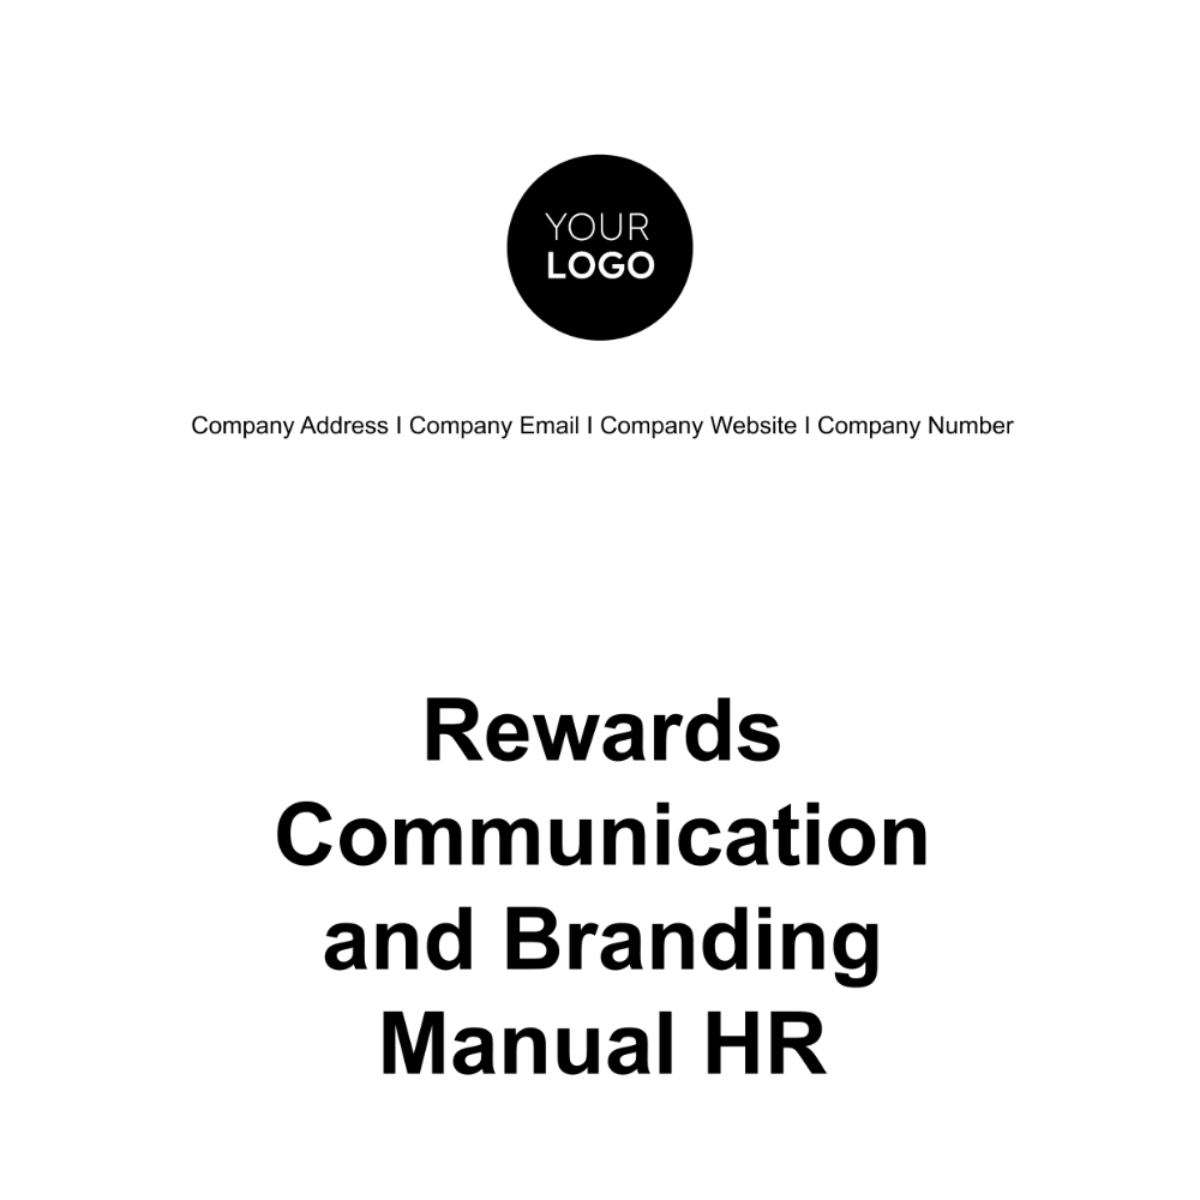 Rewards Communication and Branding Manual HR Template